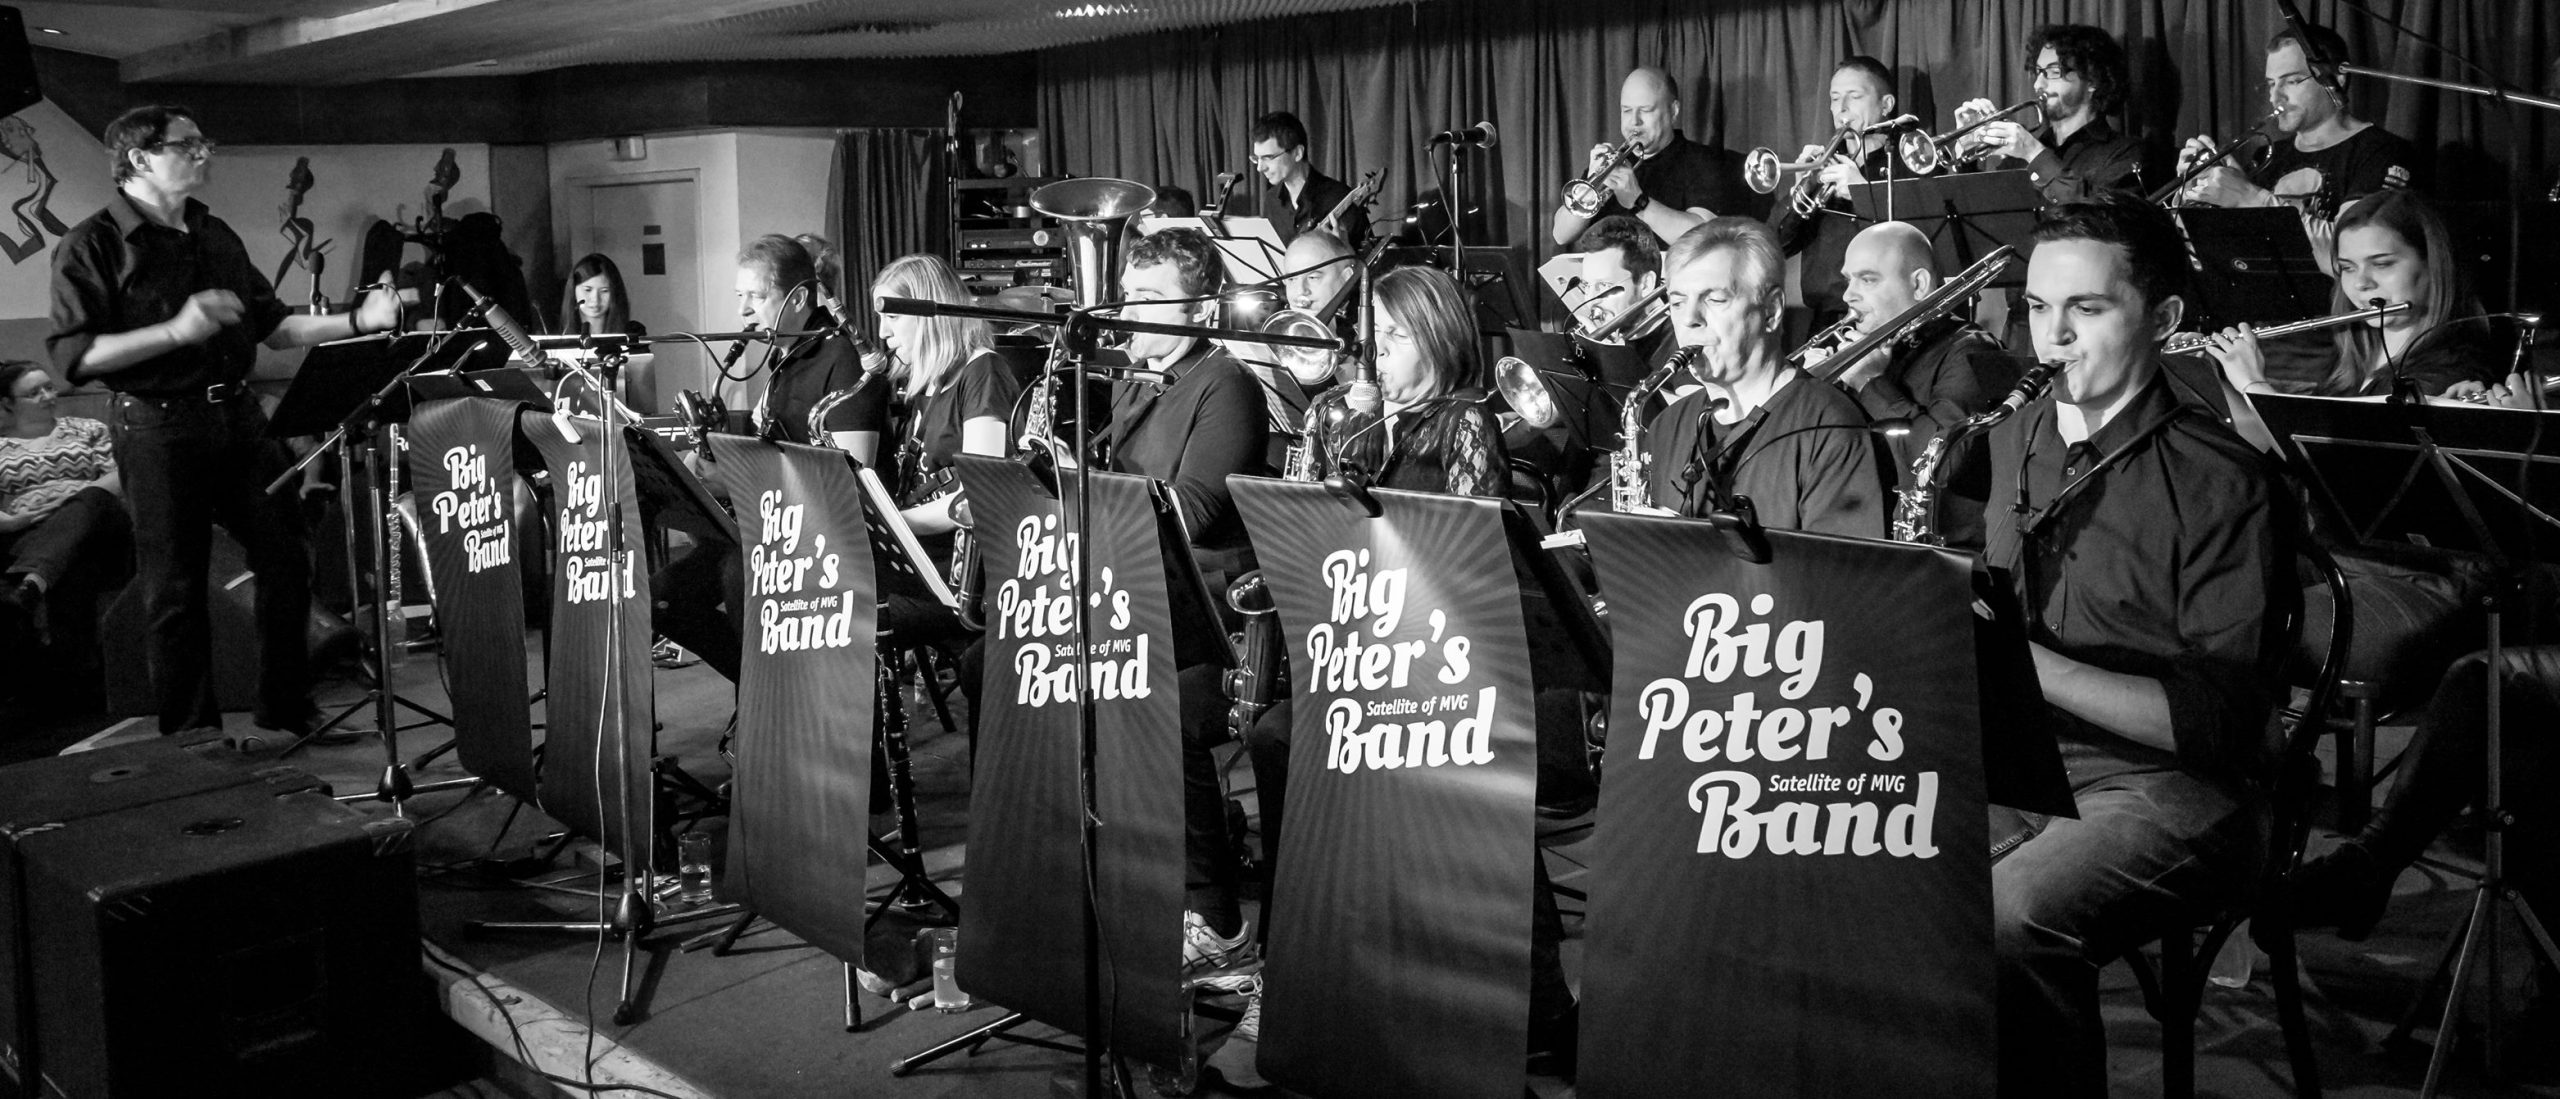 Big Peter’s Band am 28. June 2023 @ 1019 Jazzclub.